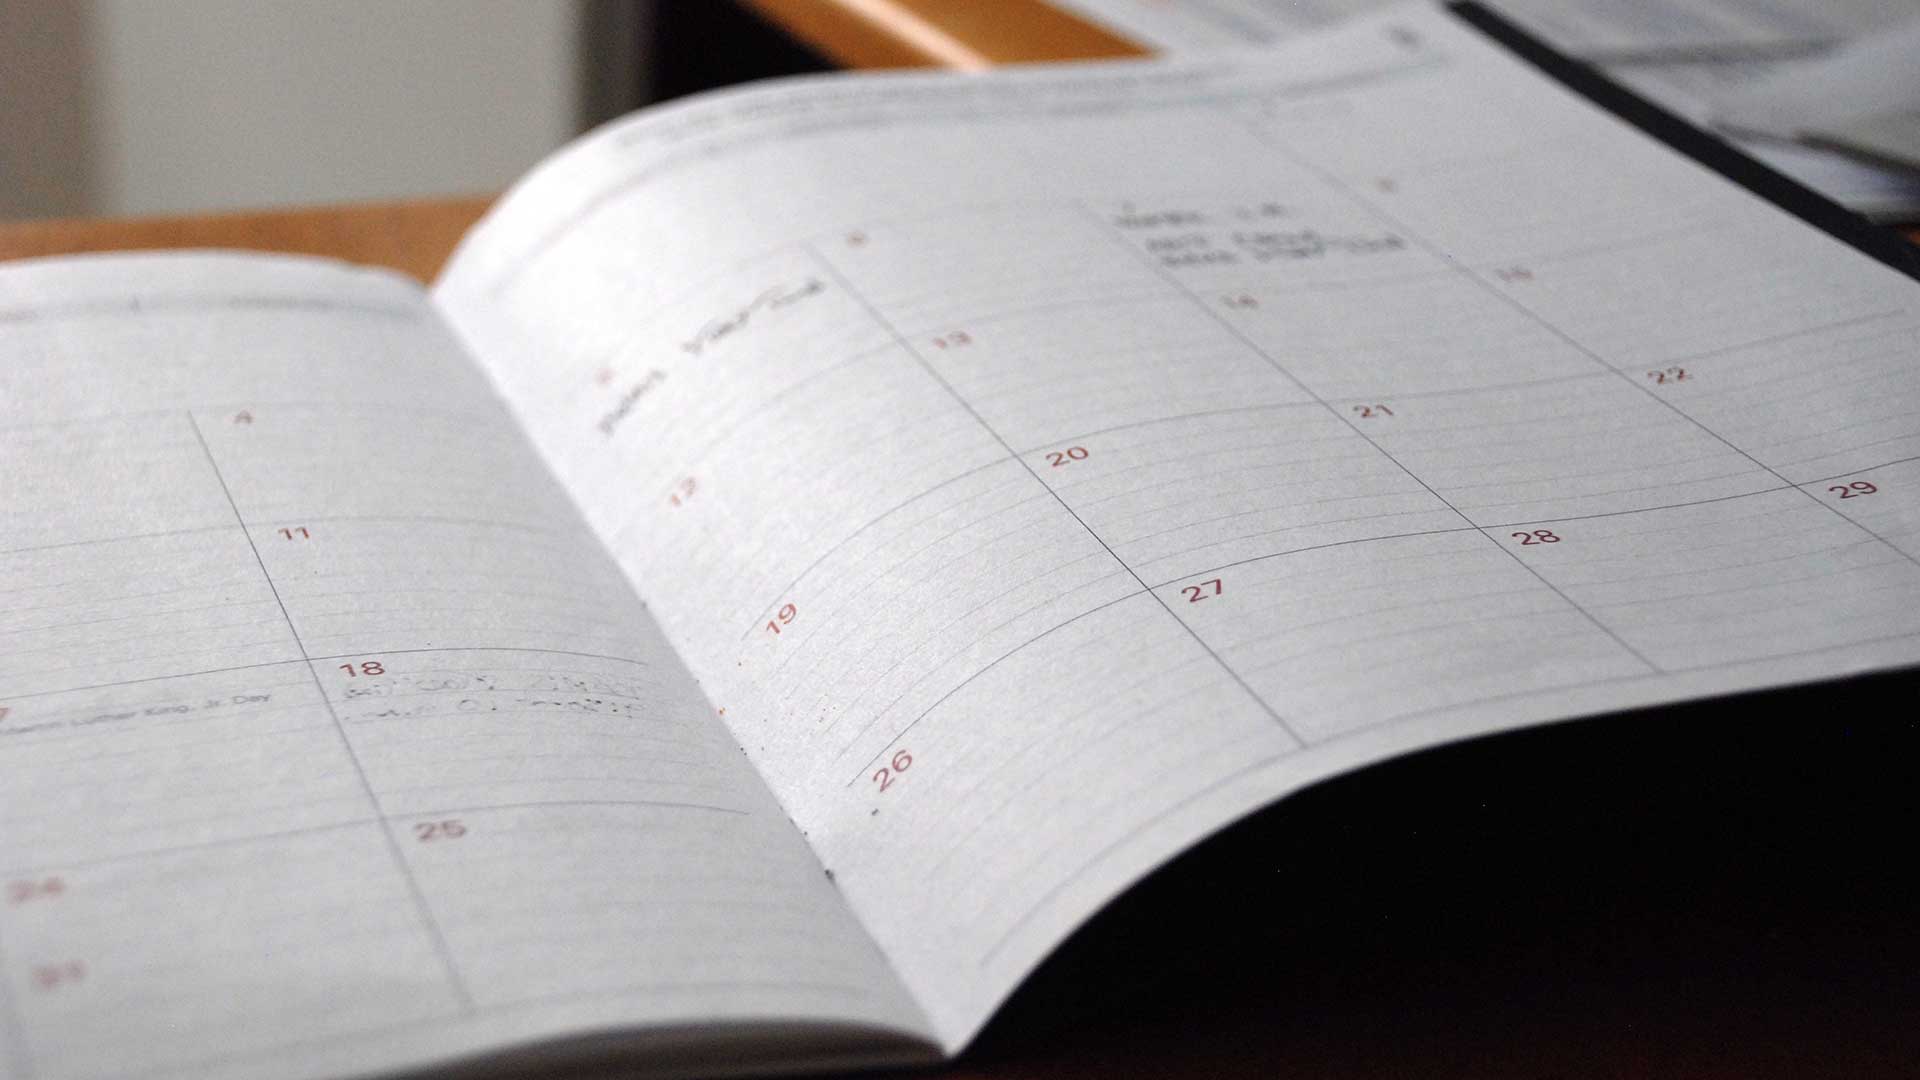 web based diary